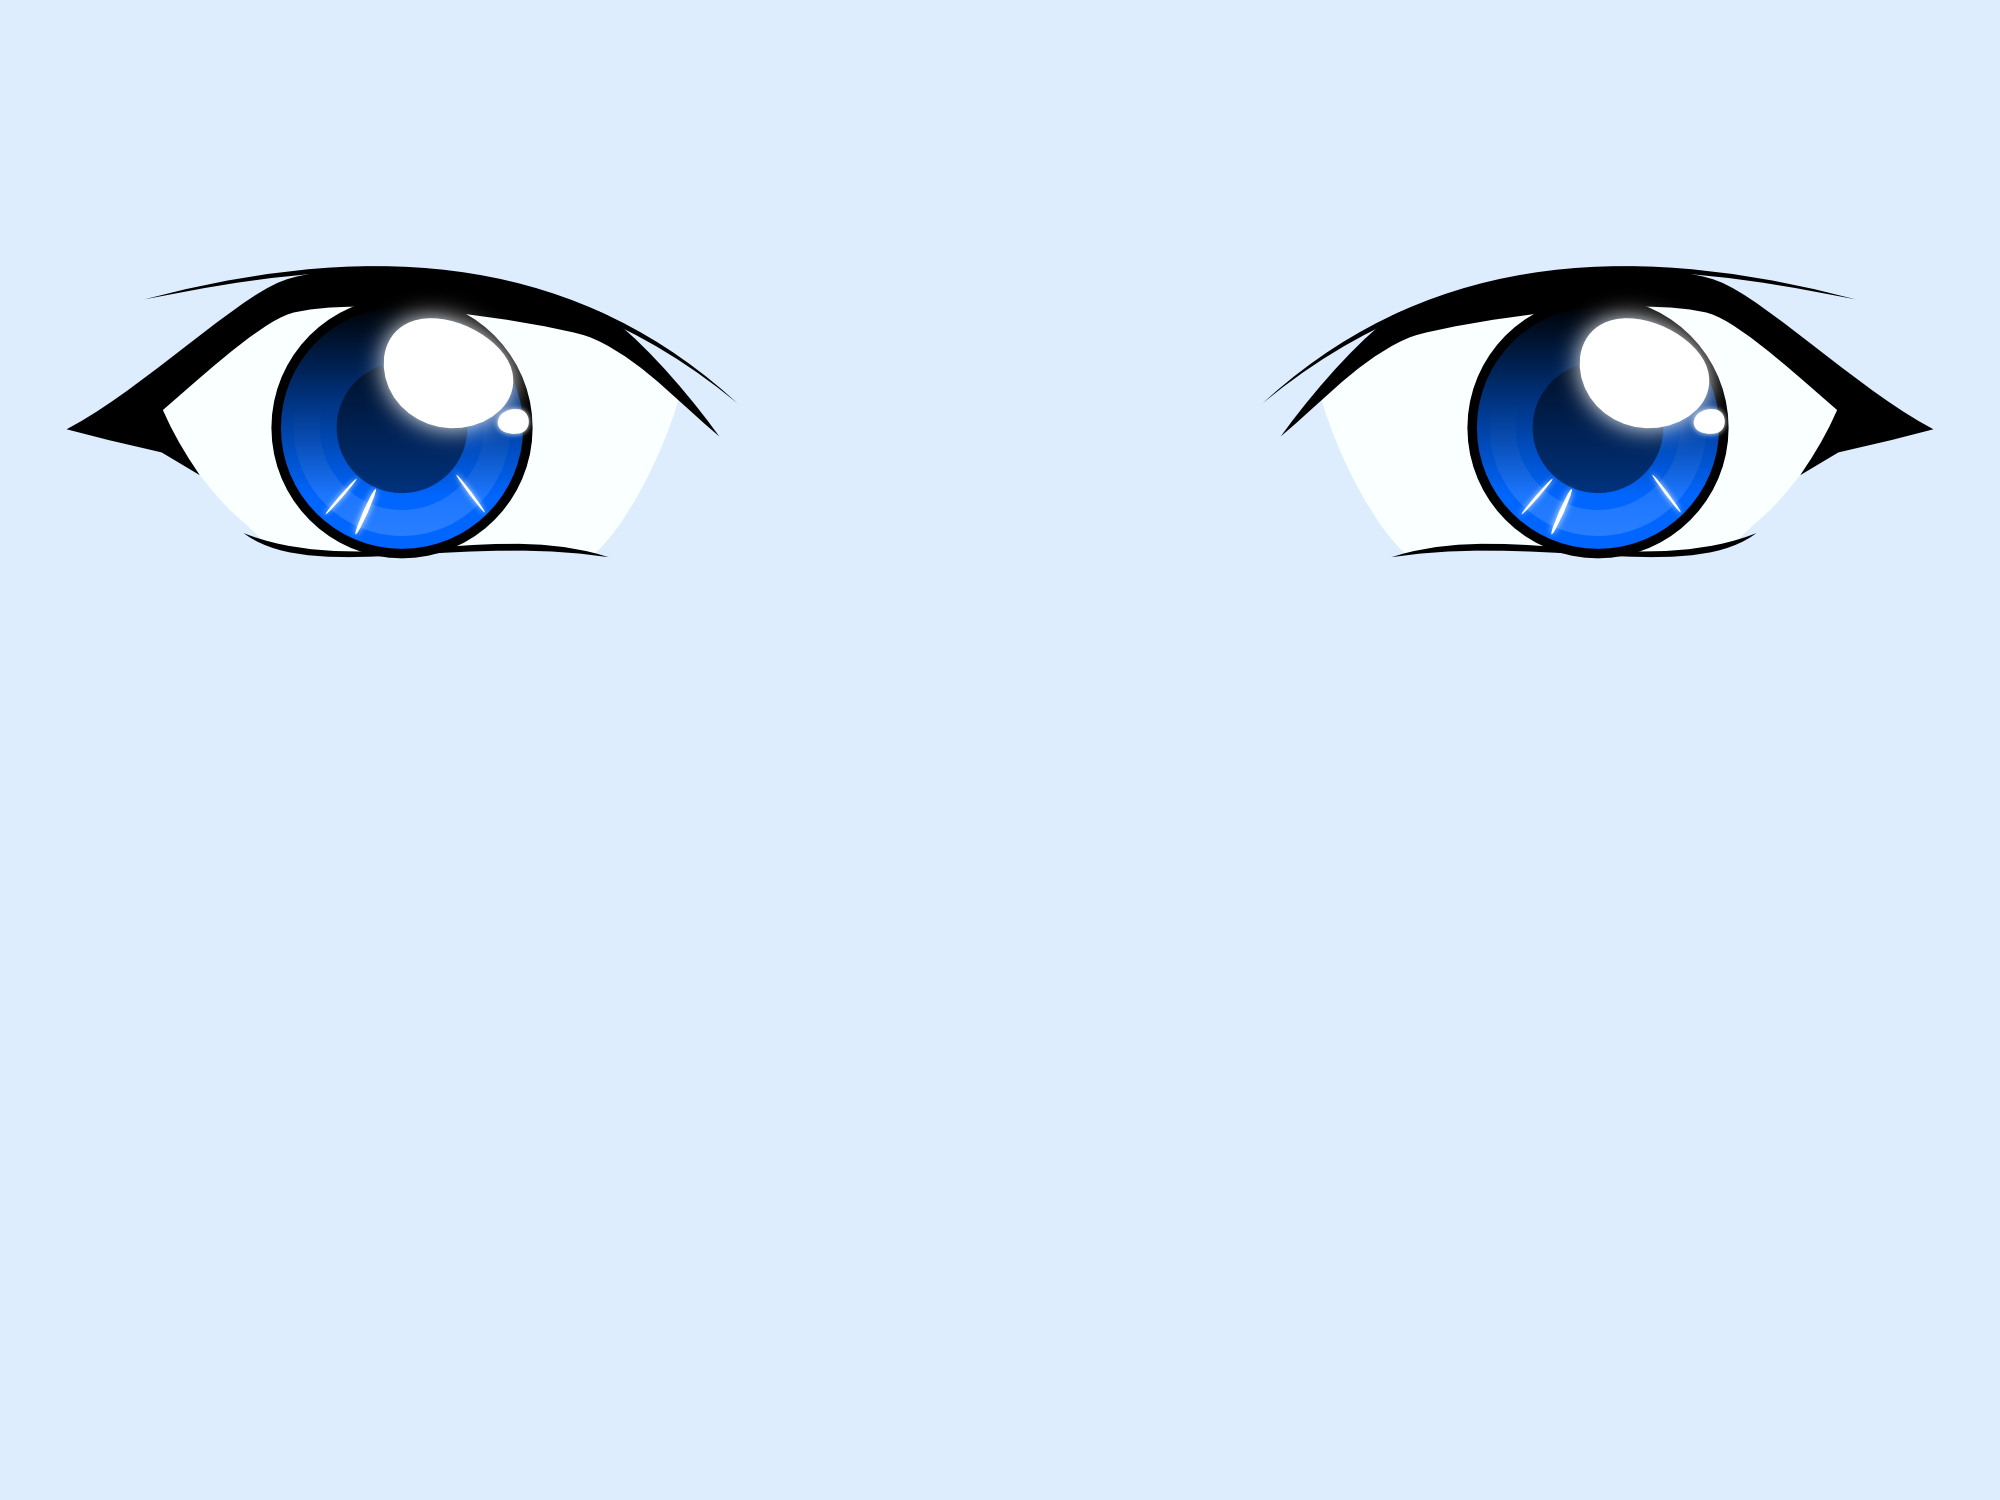 Ojos anime vector by ike2 on DeviantArt